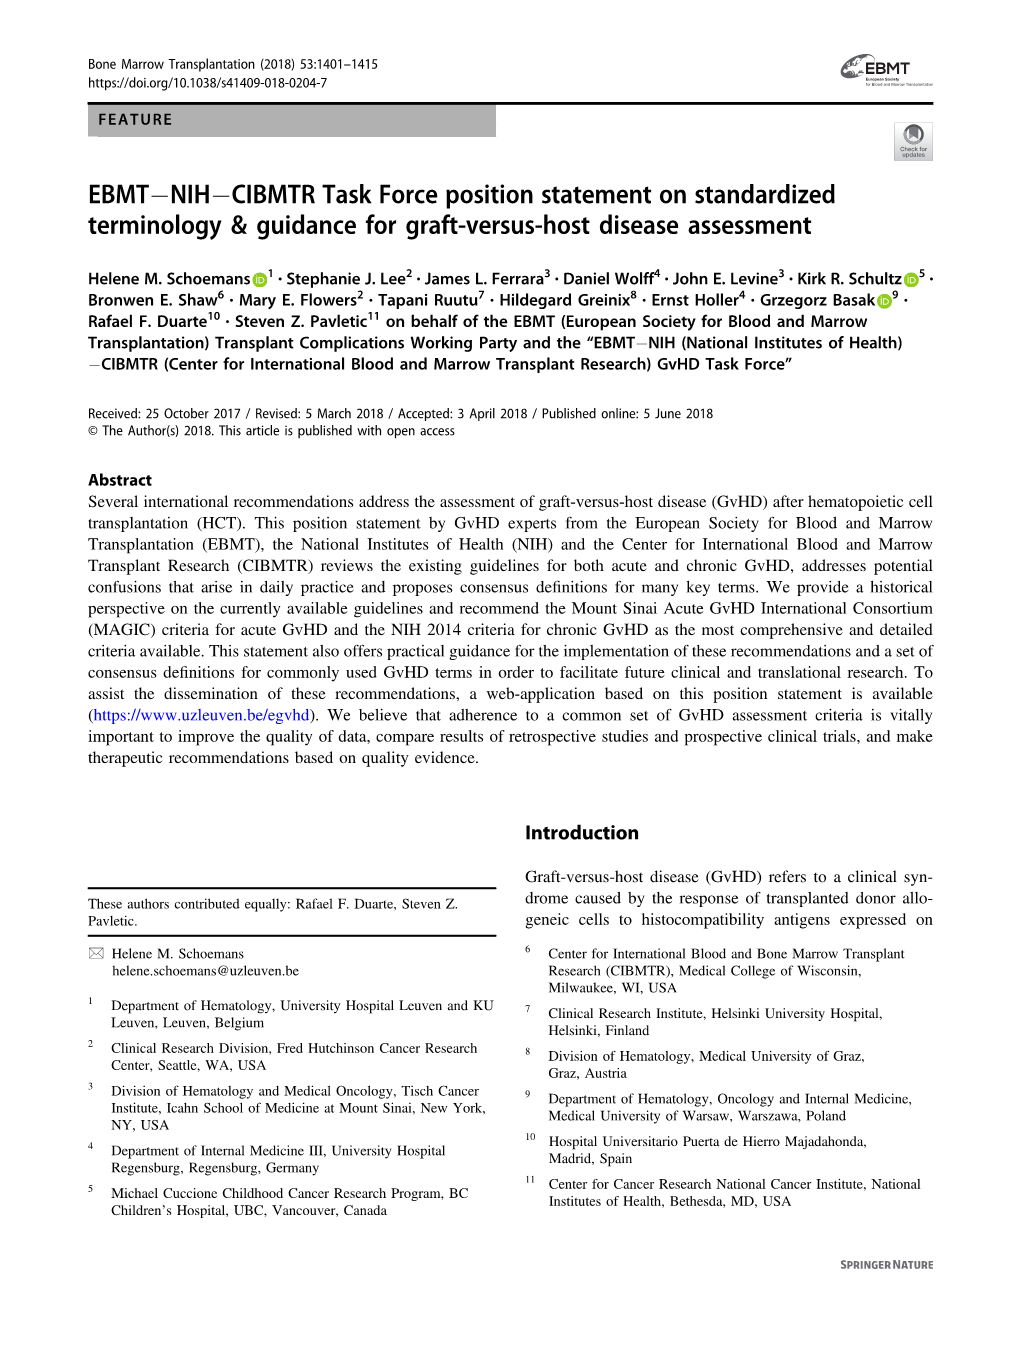 EBMT−NIH−CIBMTR Task Force Position Statement on Standardized Terminology & Guidance for Graft-Versus-Host Disease Assessment